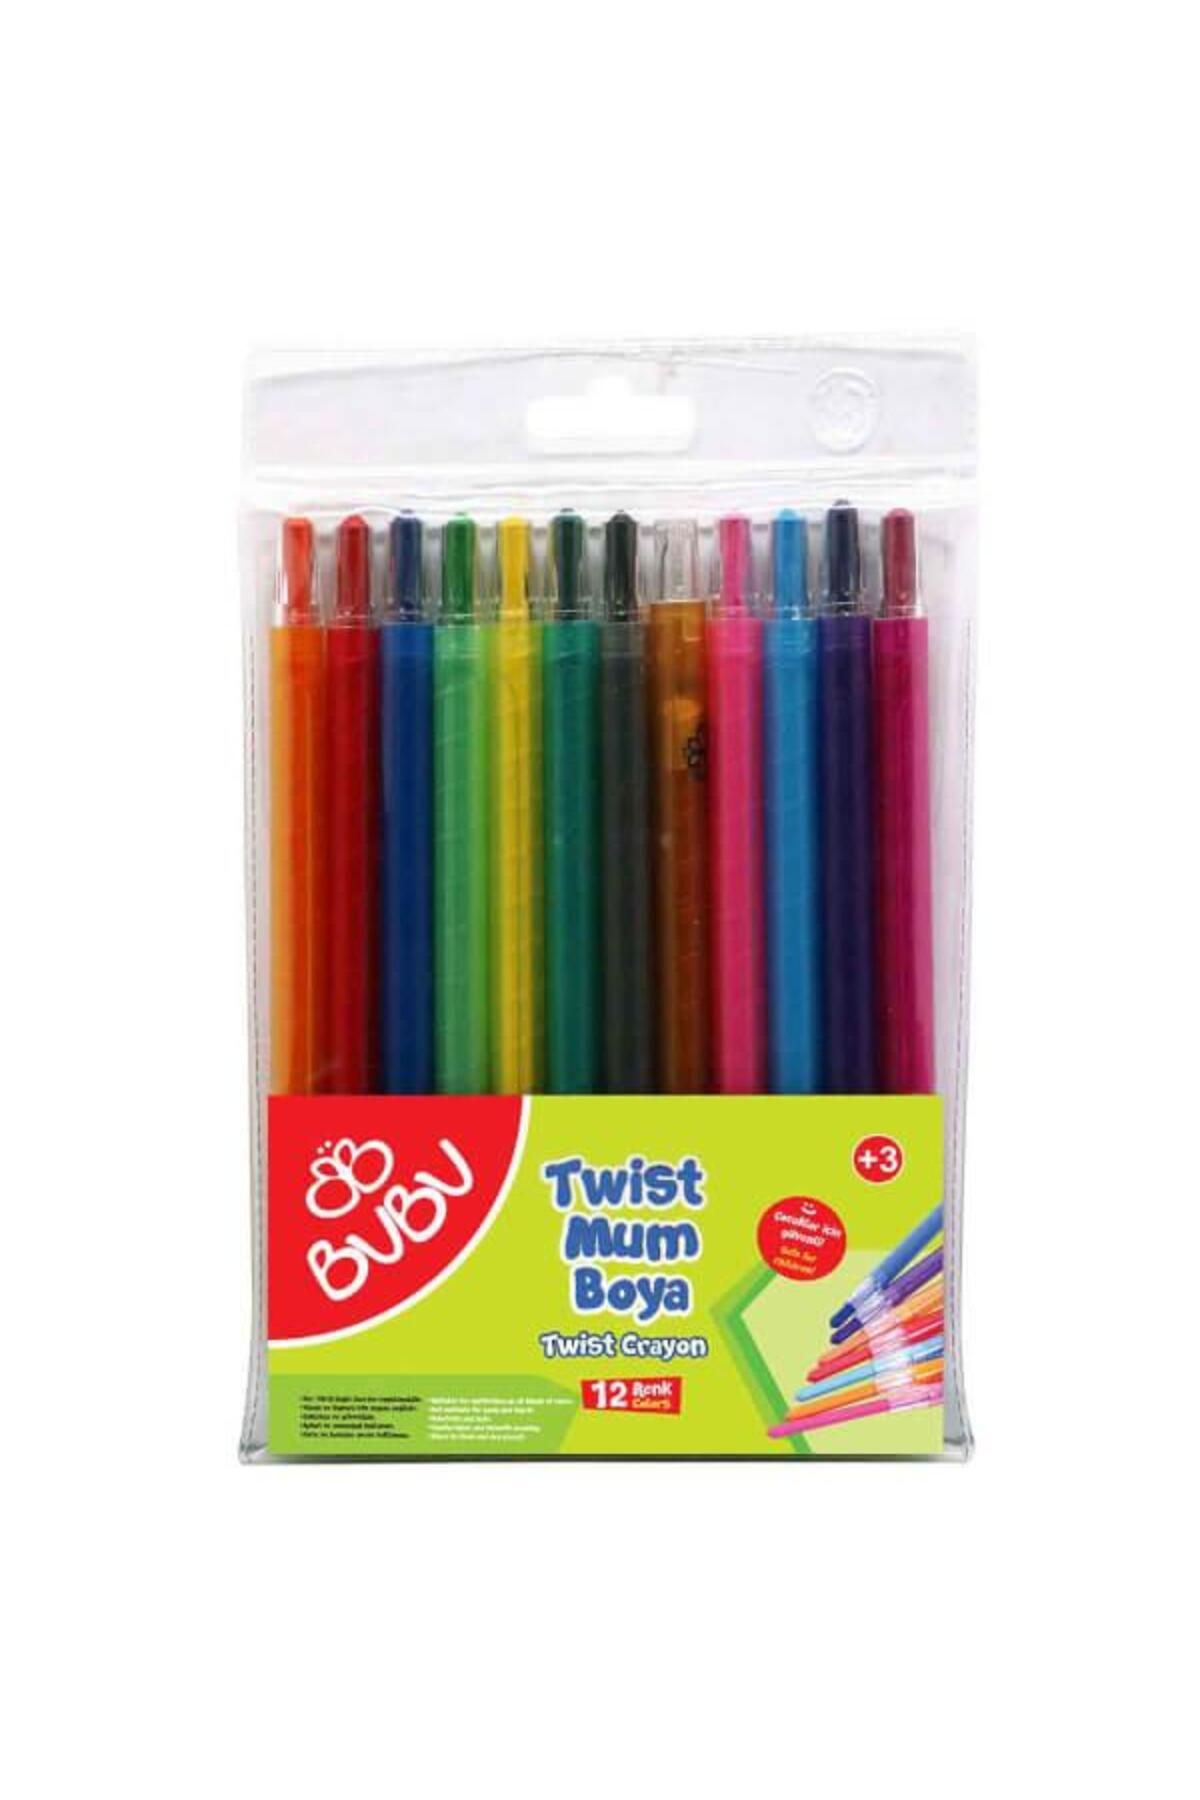 Bubu Bu-bu Twıst Crayon (mum) Boya 12 Renk